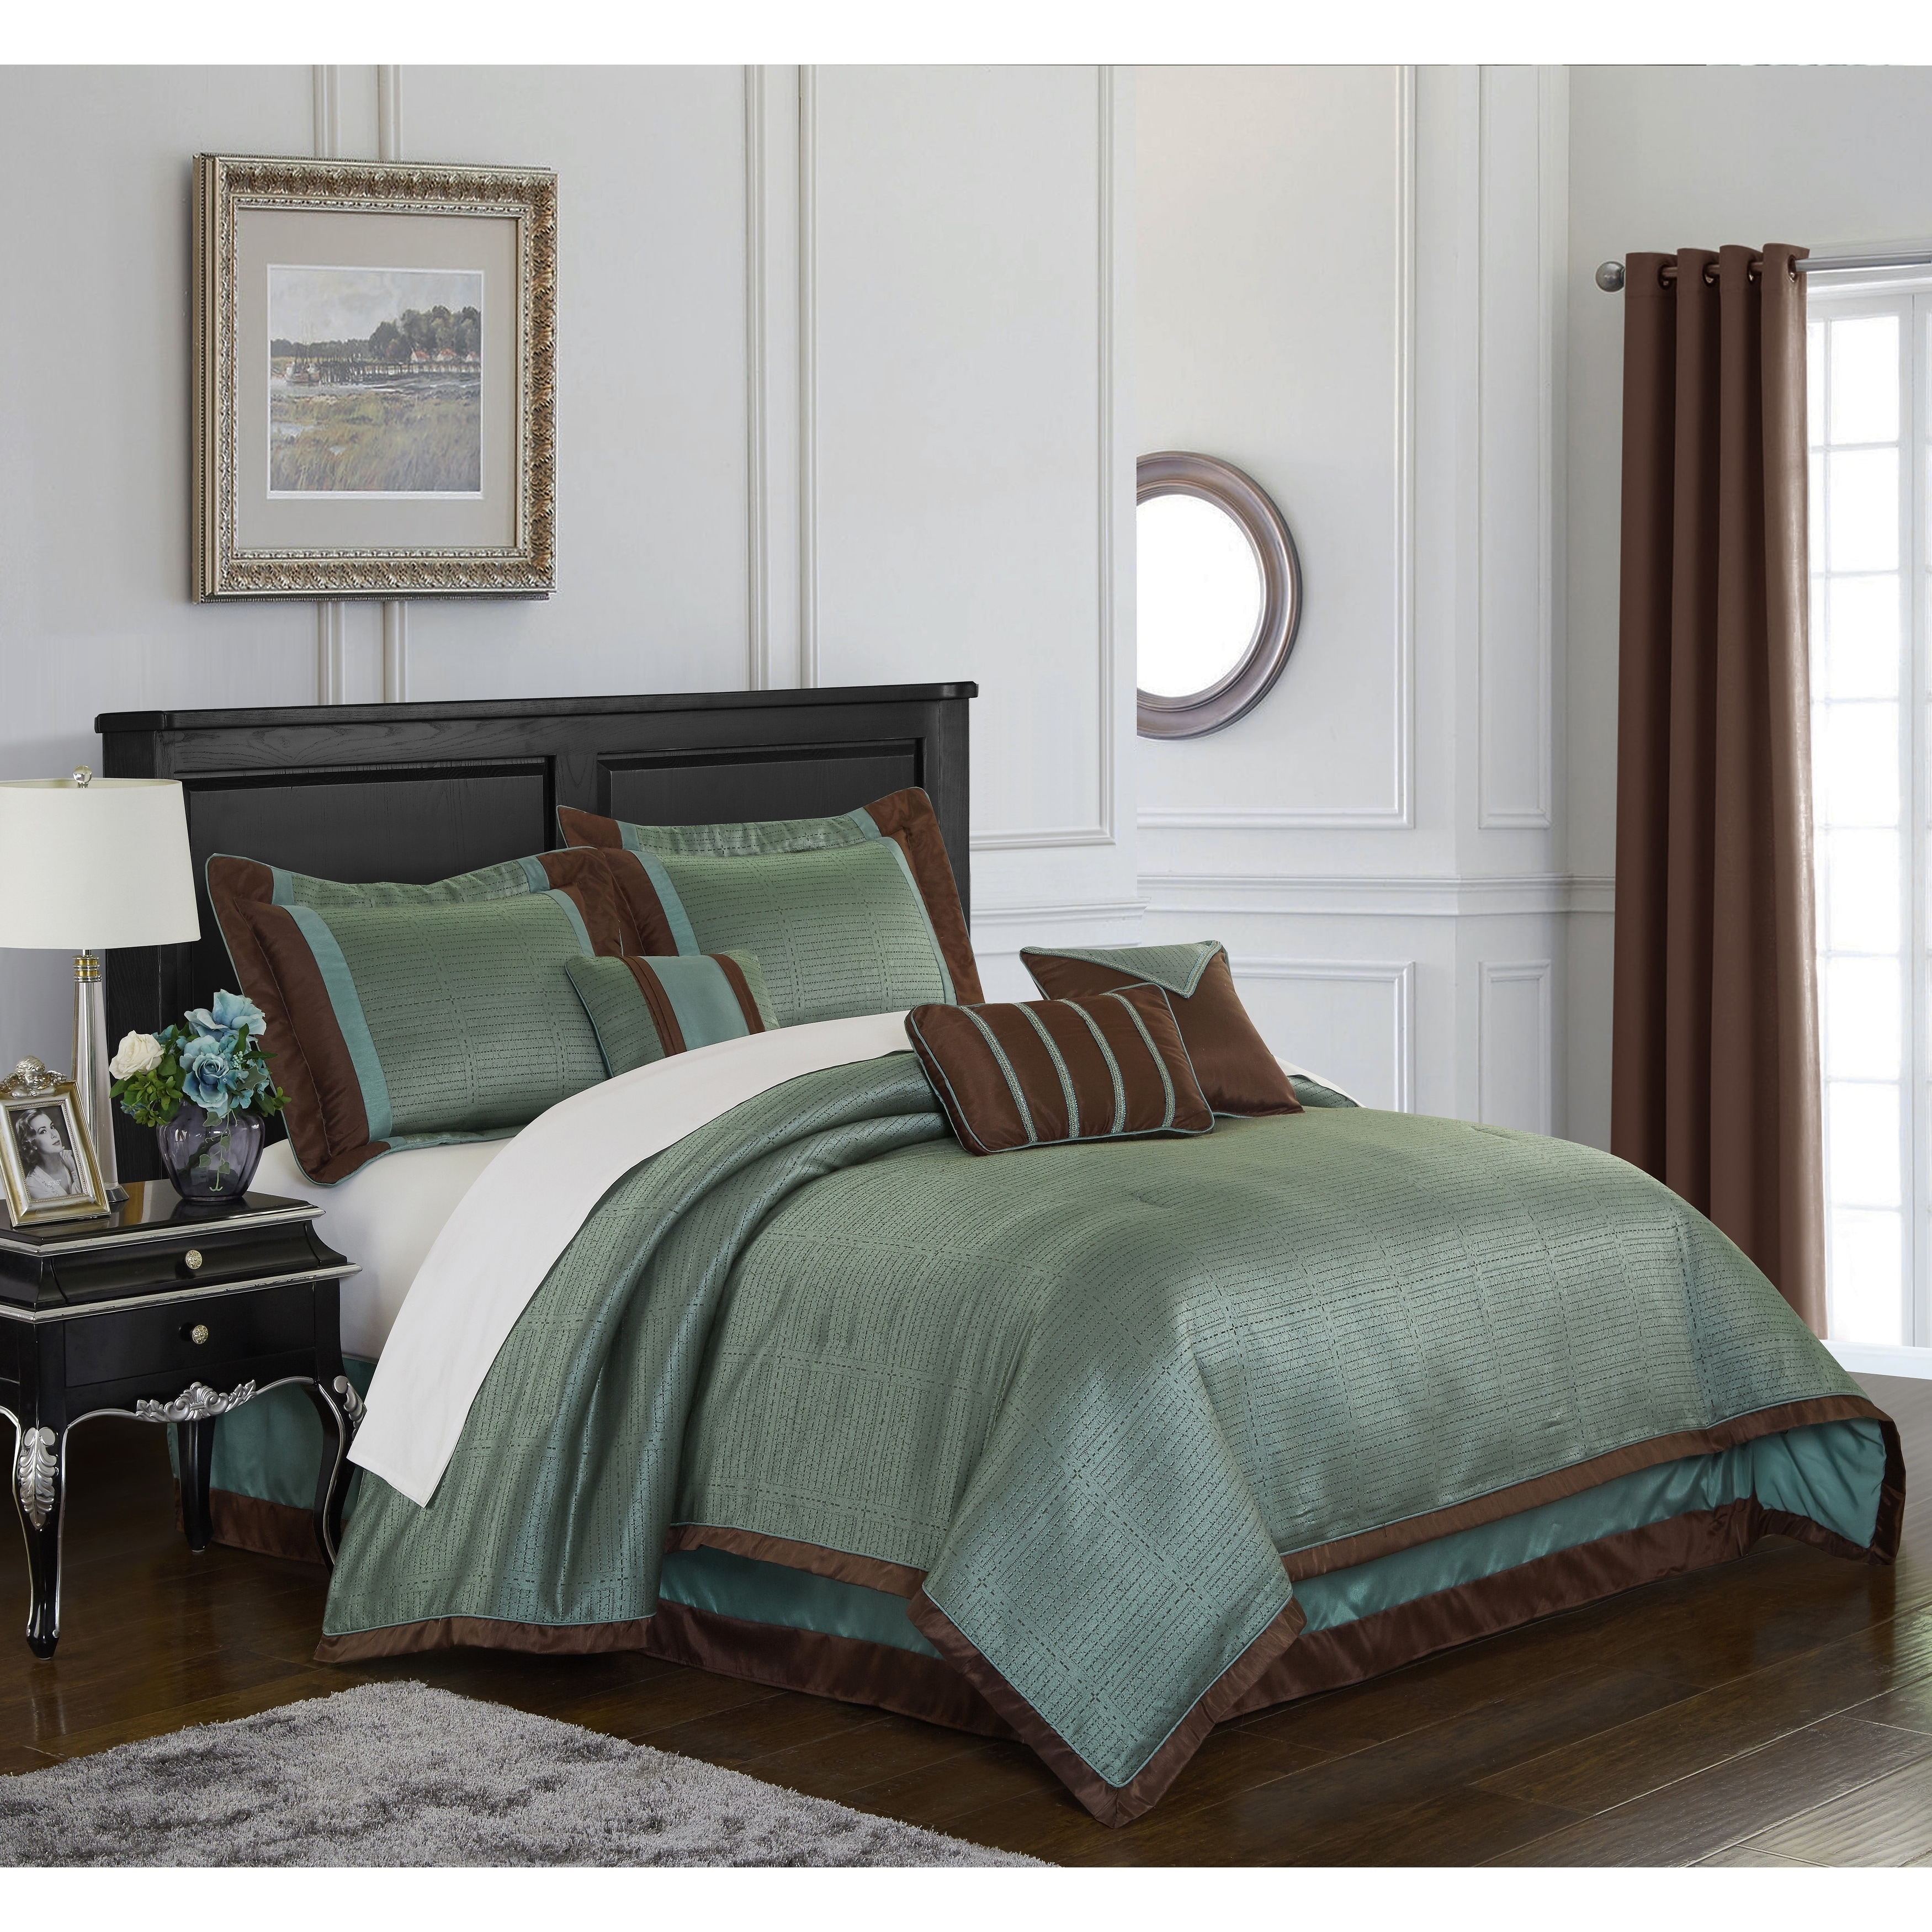 Nanshing Tobey 7-Piece Bedding Comforter Set, Turquoise, Queen - image 2 of 5